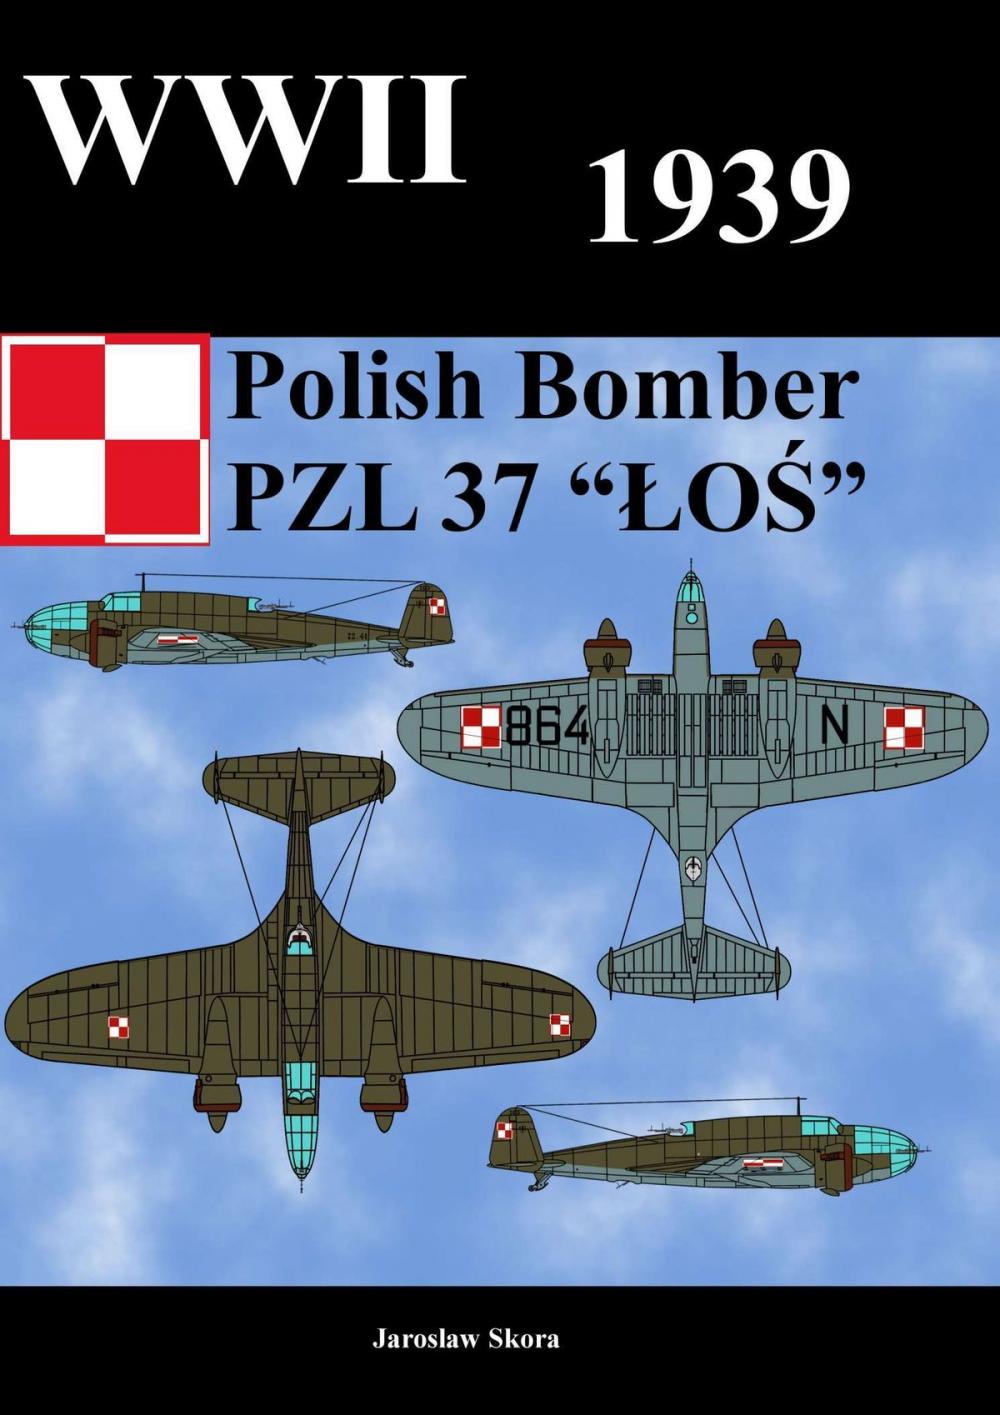 Big bigCover of WWII 1939 Polish Bomber PZL 37 “LOS”